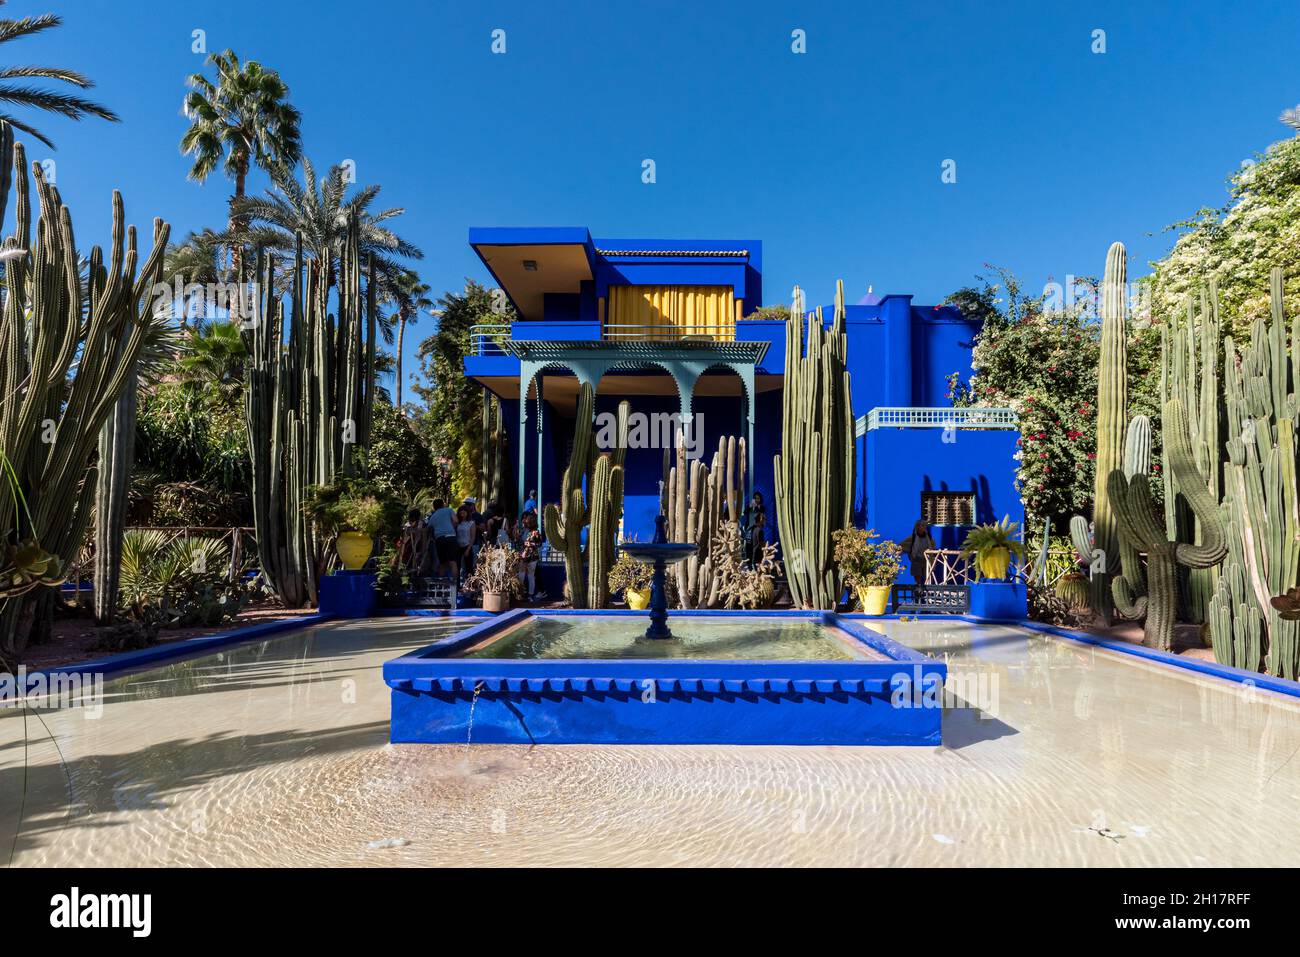 Le Jardin Majorelle, Marrakech, Morocco - November 14, 2017: Beautiful blue architecture of the villa complex and tropical botanical garden build in t Stock Photo